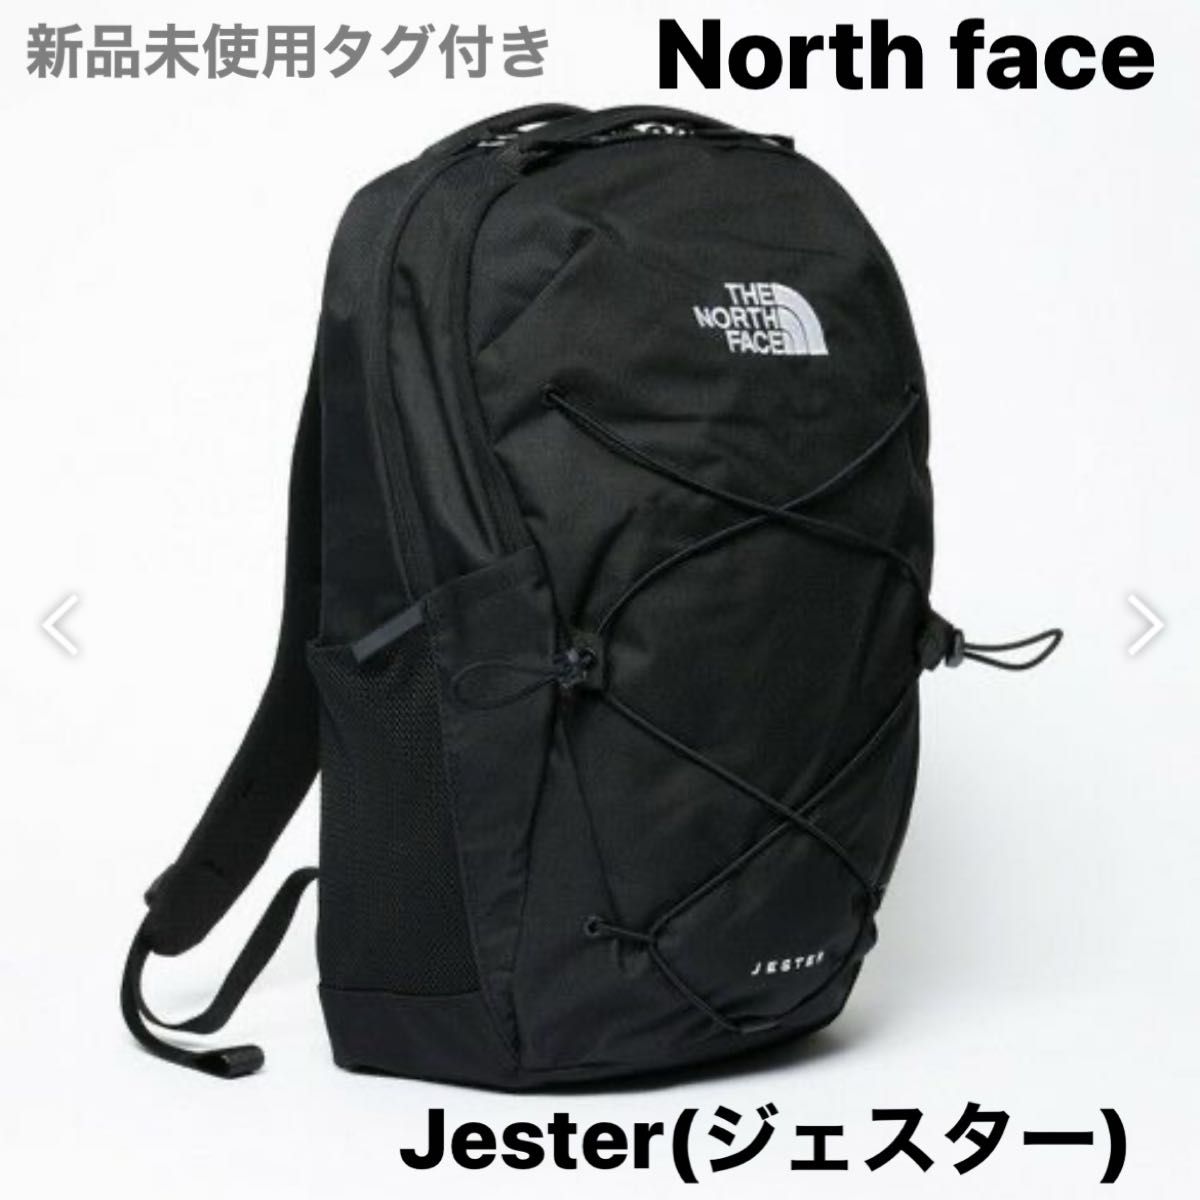 【THE NORTH FACE/ザノースフェイス】Jester(ジェスター)新品未使用タグ付き